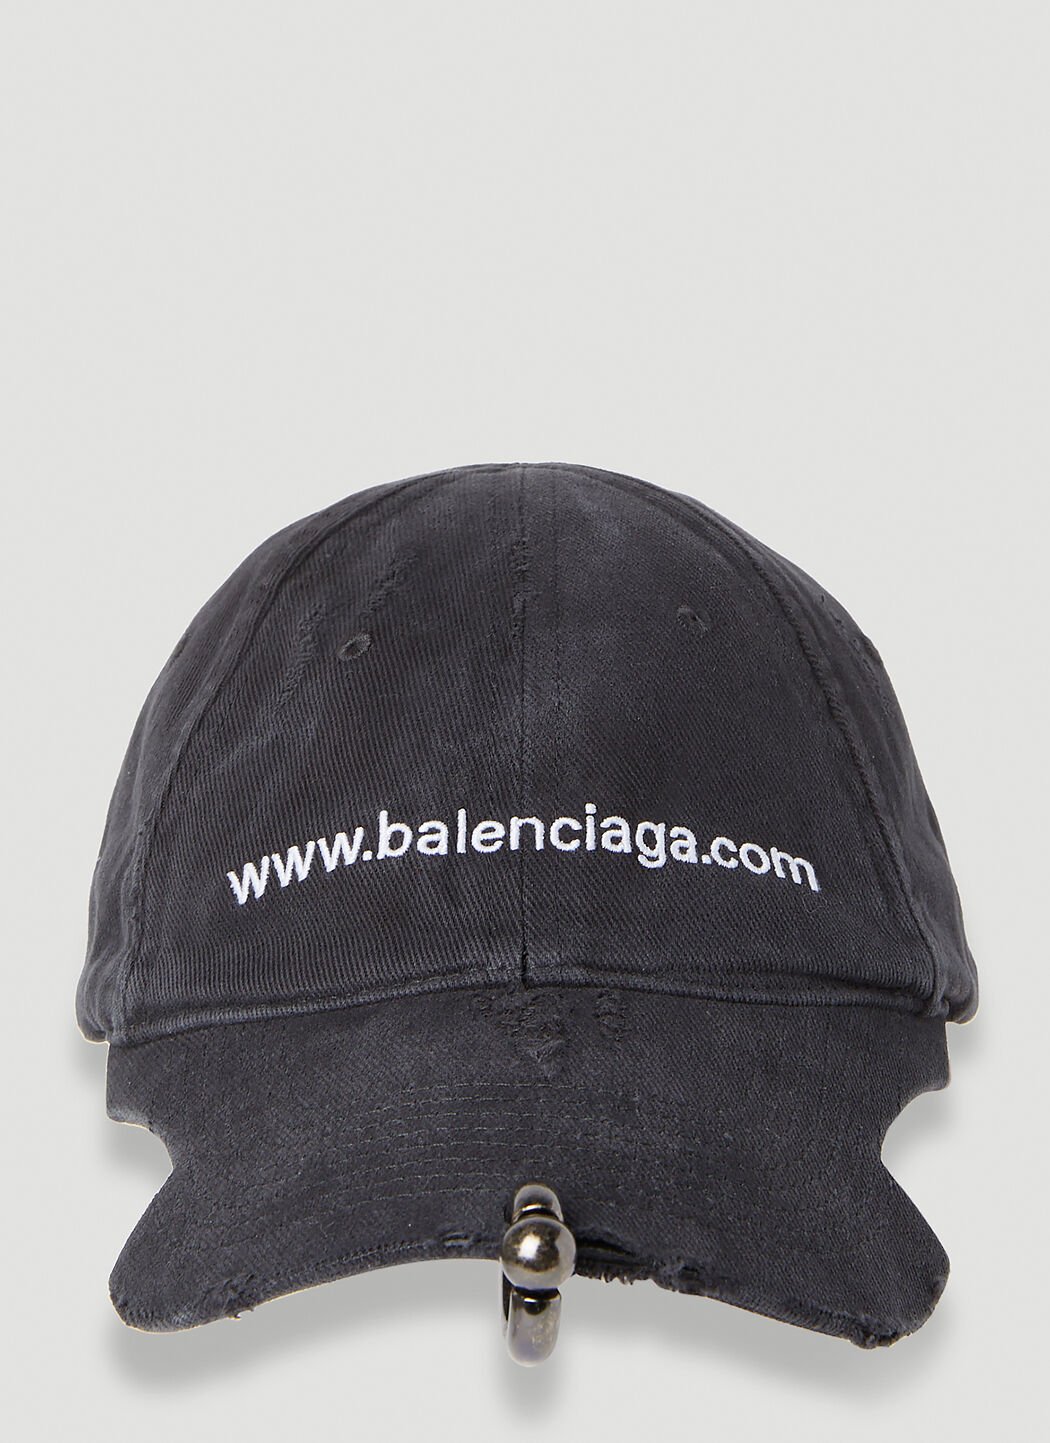 Balenciaga Website 穿孔棒球帽 白色 bal0253030